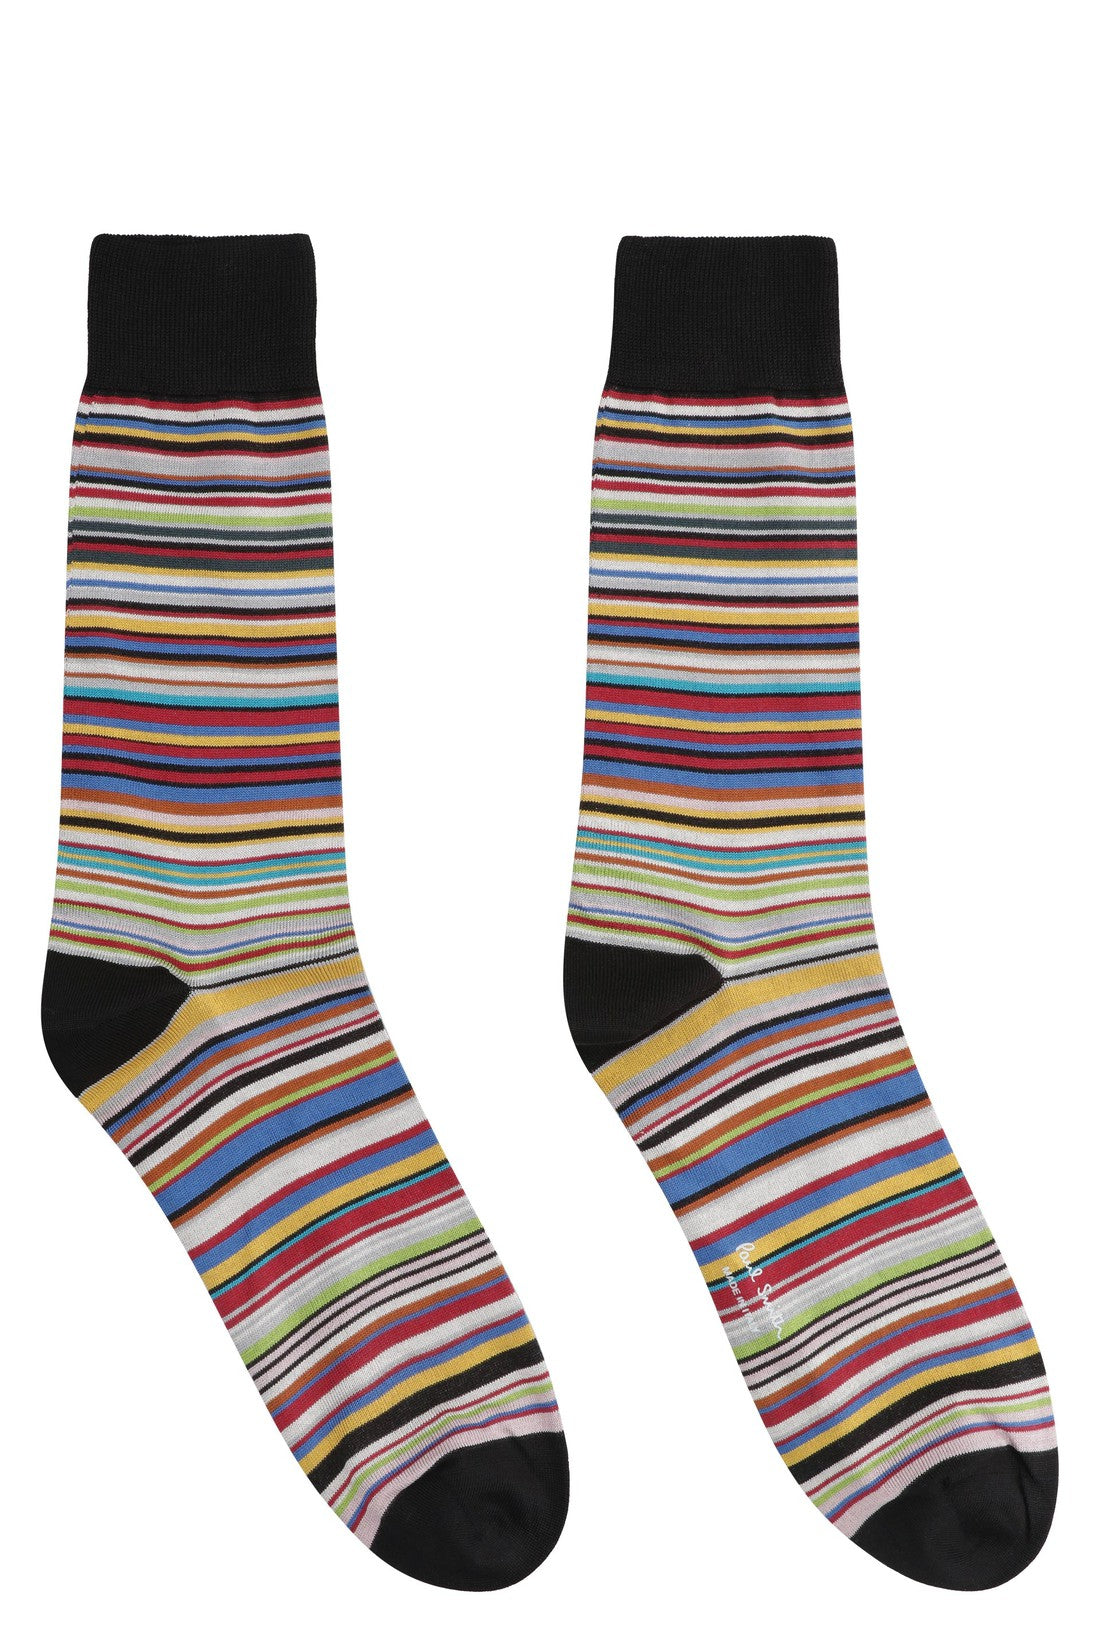 Paul Smith-OUTLET-SALE-Silk socks-ARCHIVIST